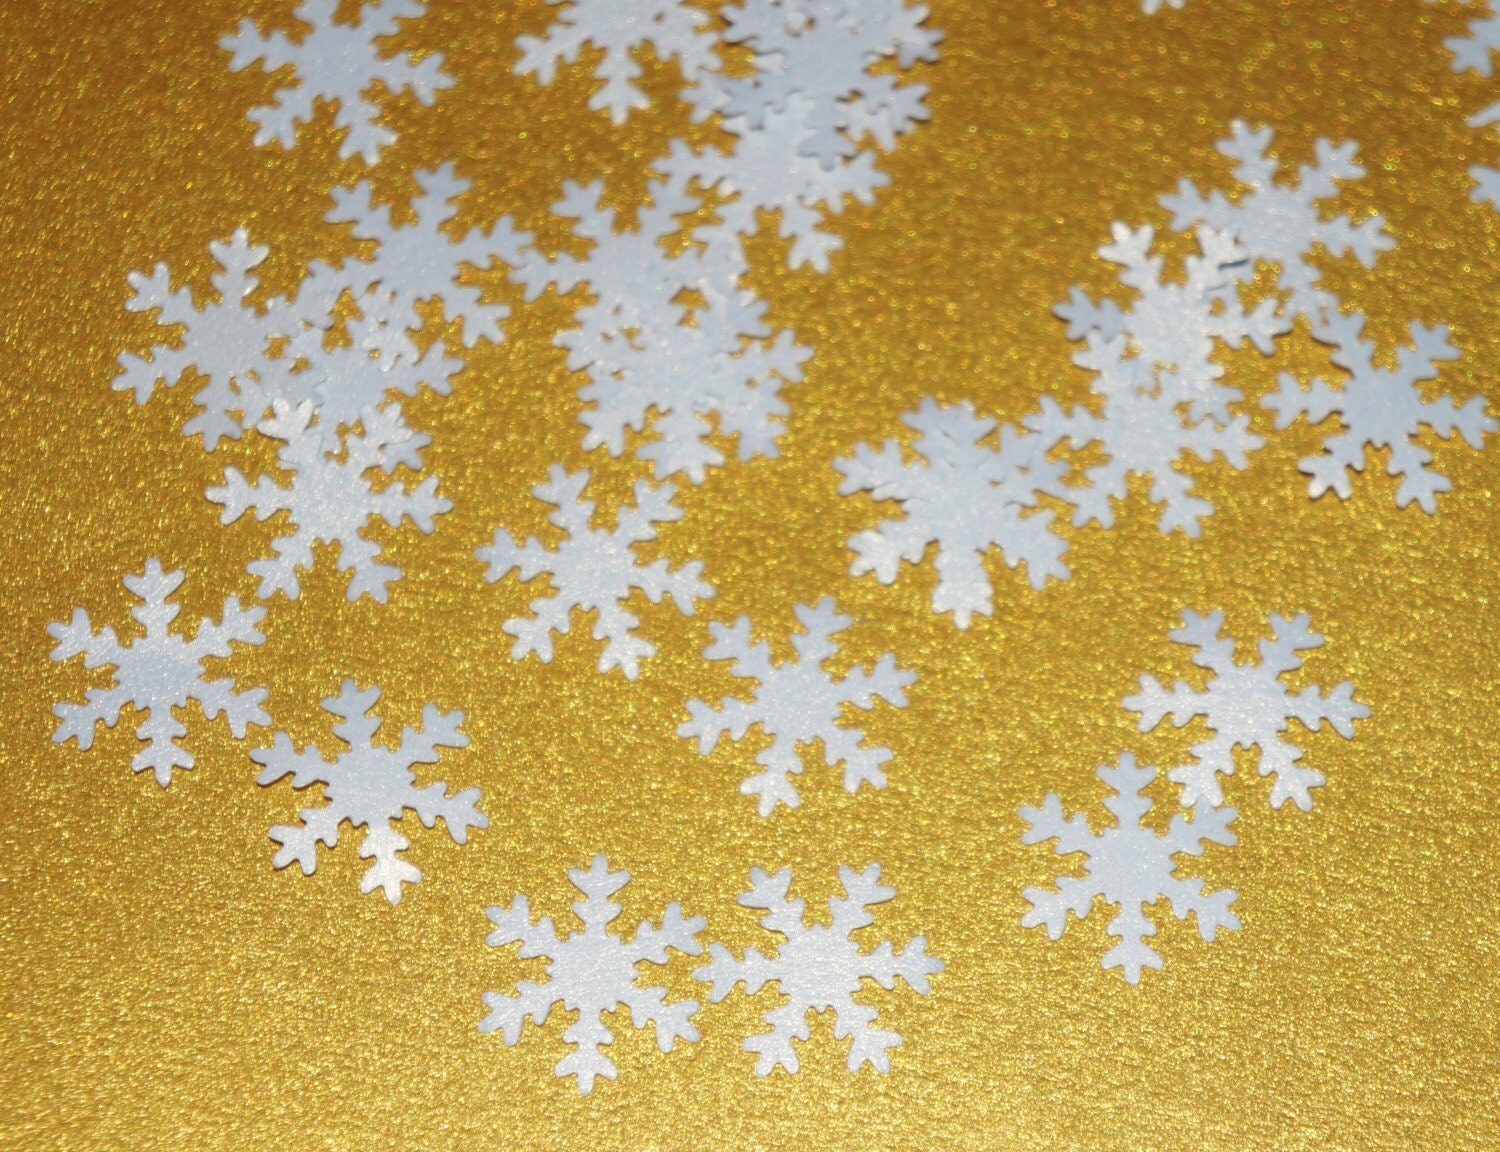 Snowflake Confetti, Winter Wedding Confetti, Christmas Snowflake ...